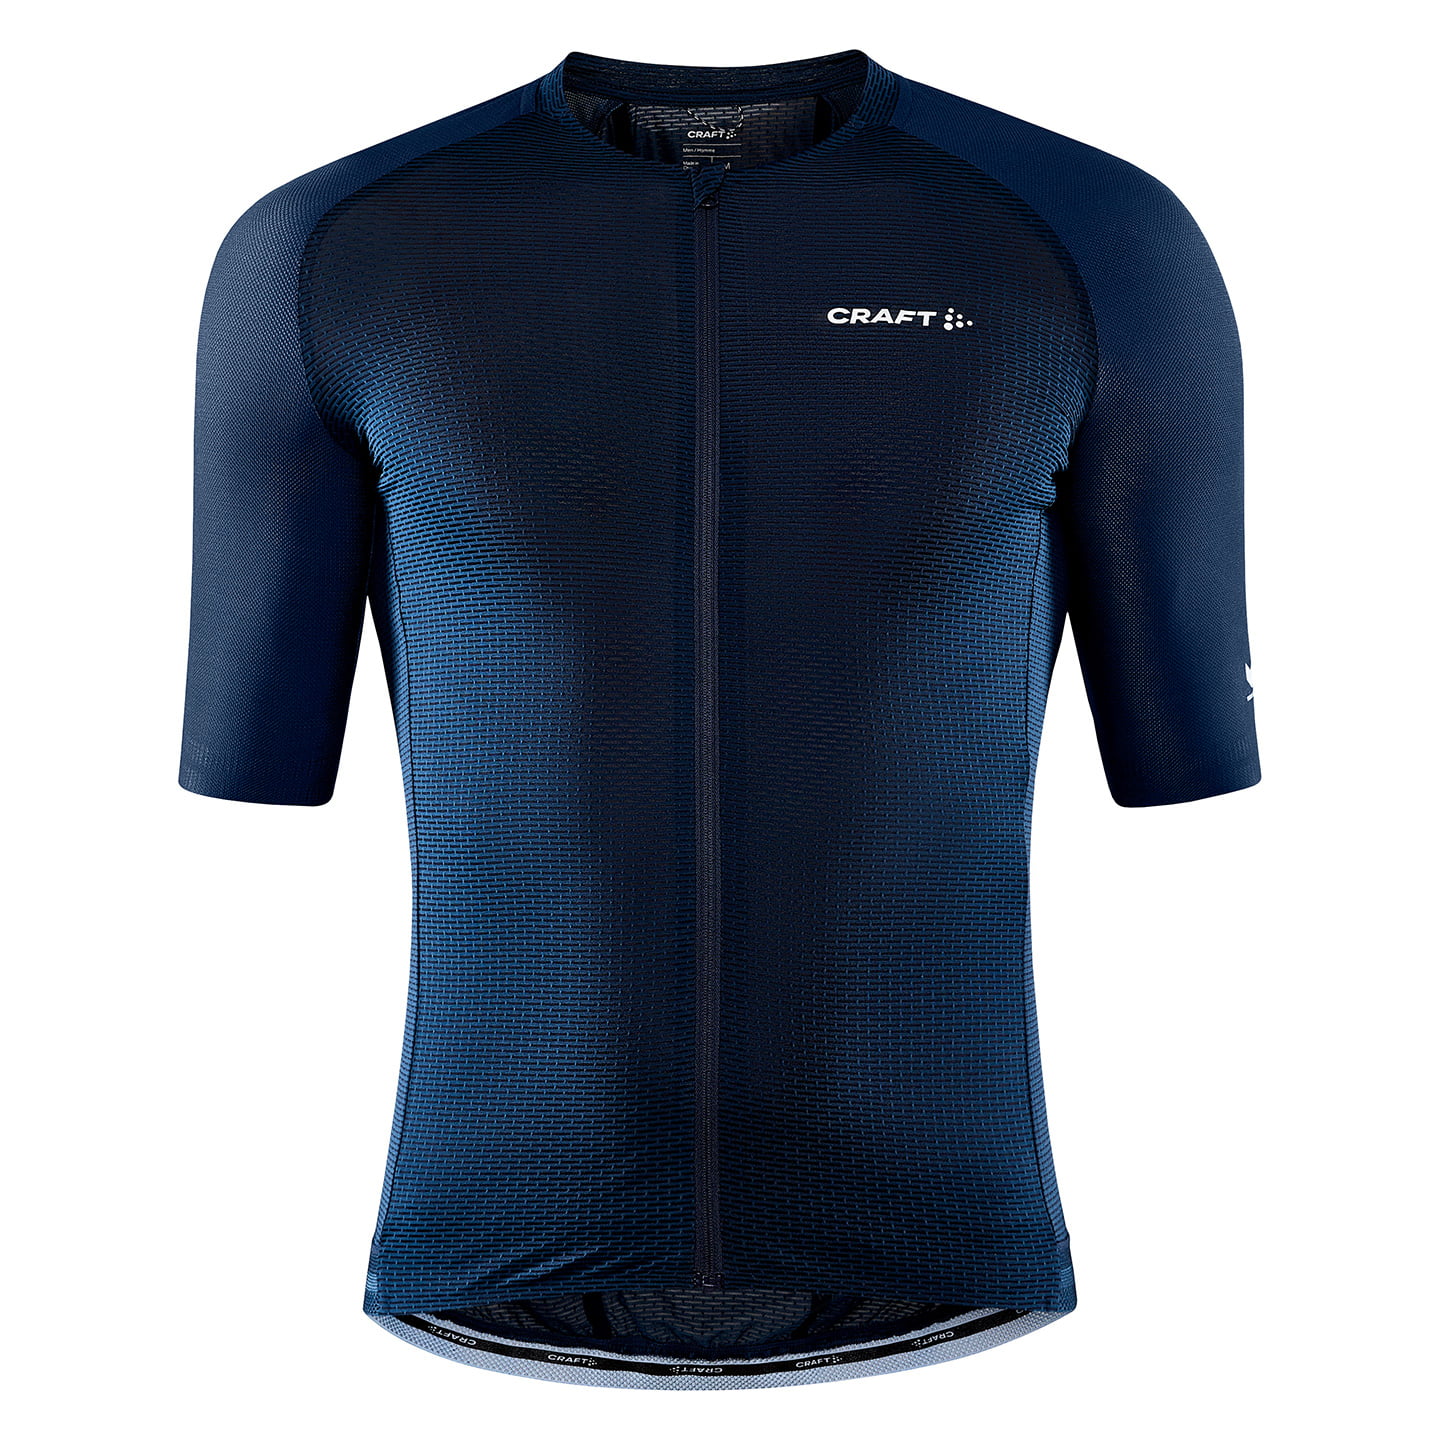 CRAFT Pro Nano Short Sleeve Jersey Short Sleeve Jersey, for men, size S, Cycling jersey, Cycling clothing